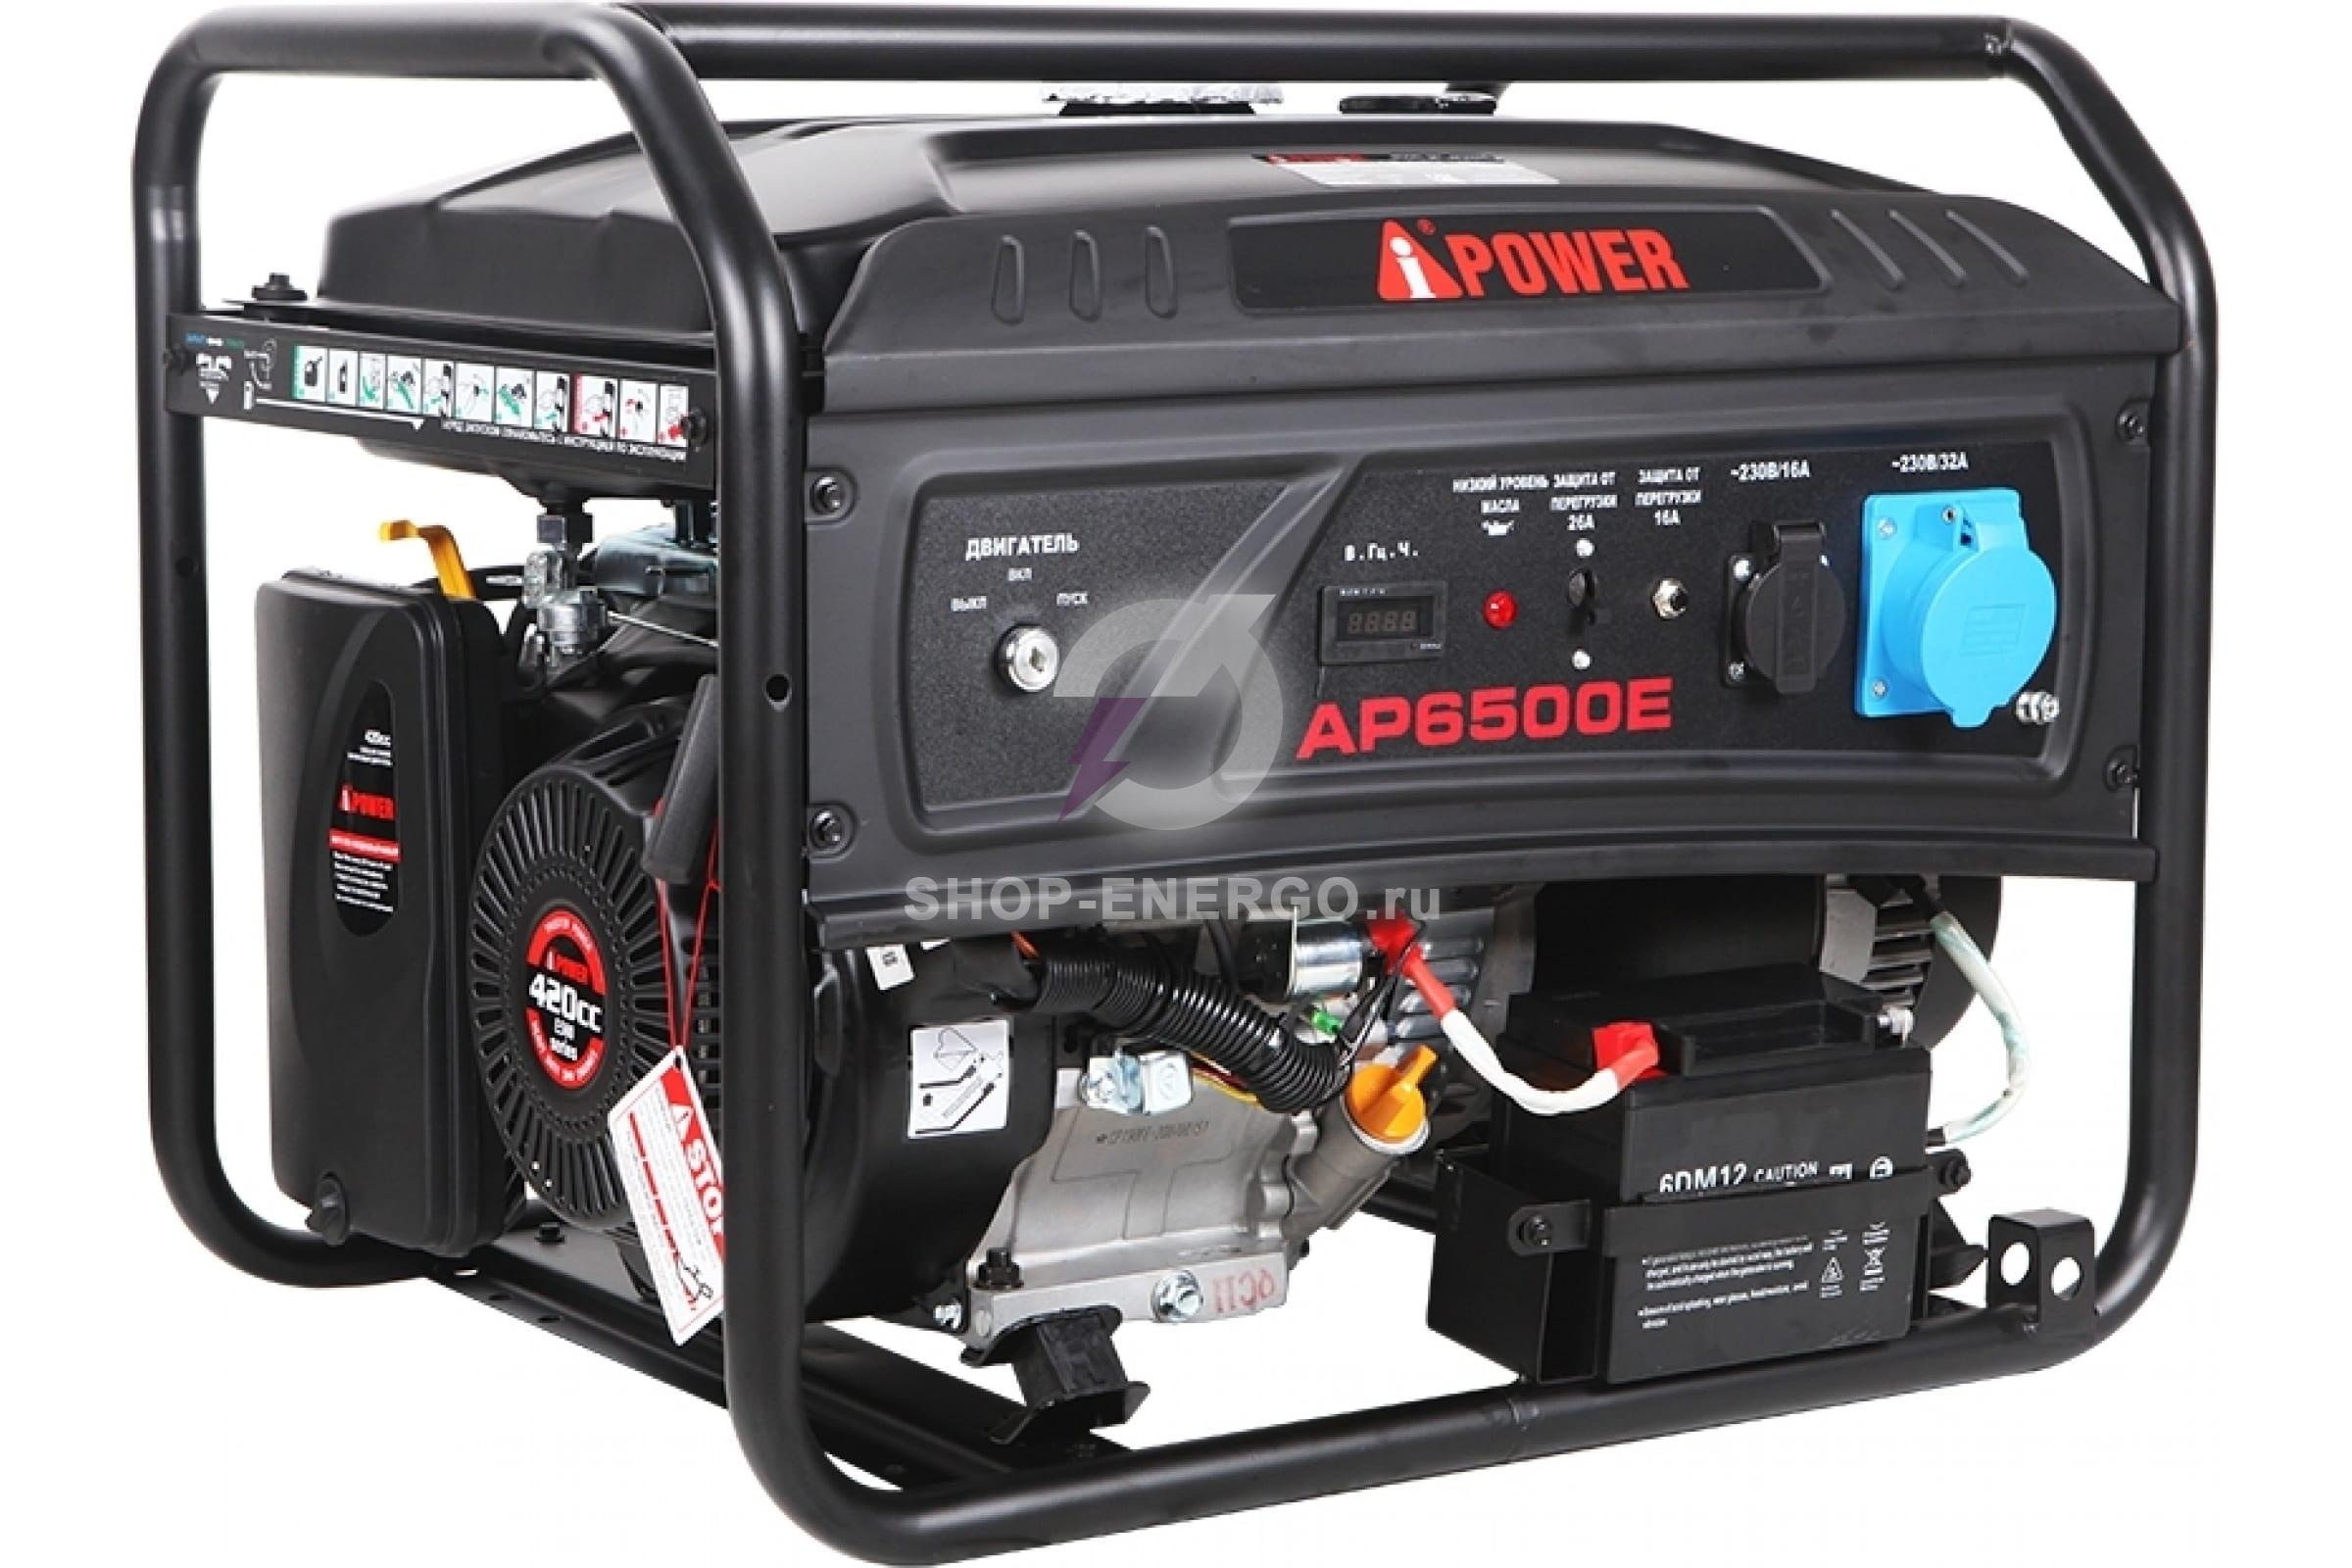   A-iPower lite A6500